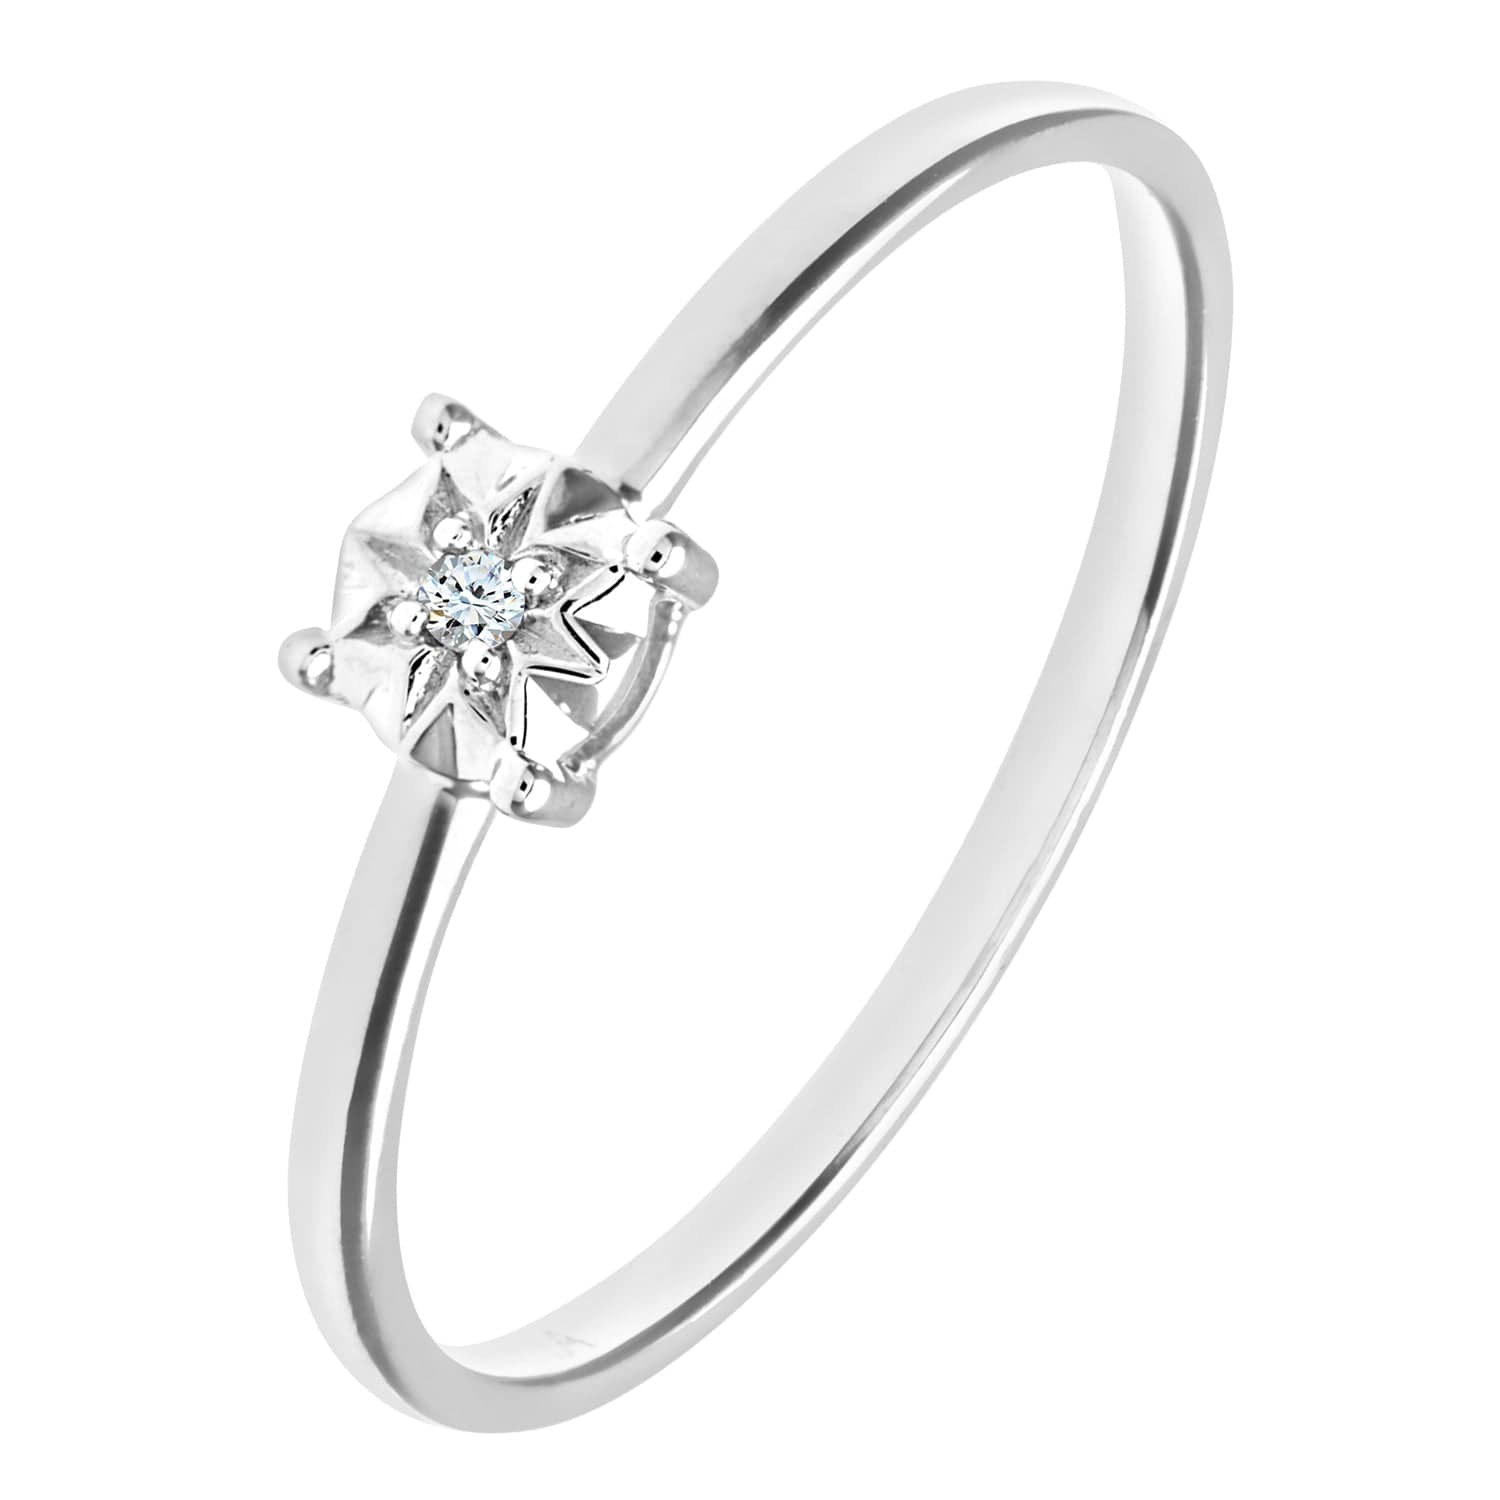 Lynora Luxe Ring White Gold 9ct / Diamond 9ct White Gold Solitare Diamond Ring